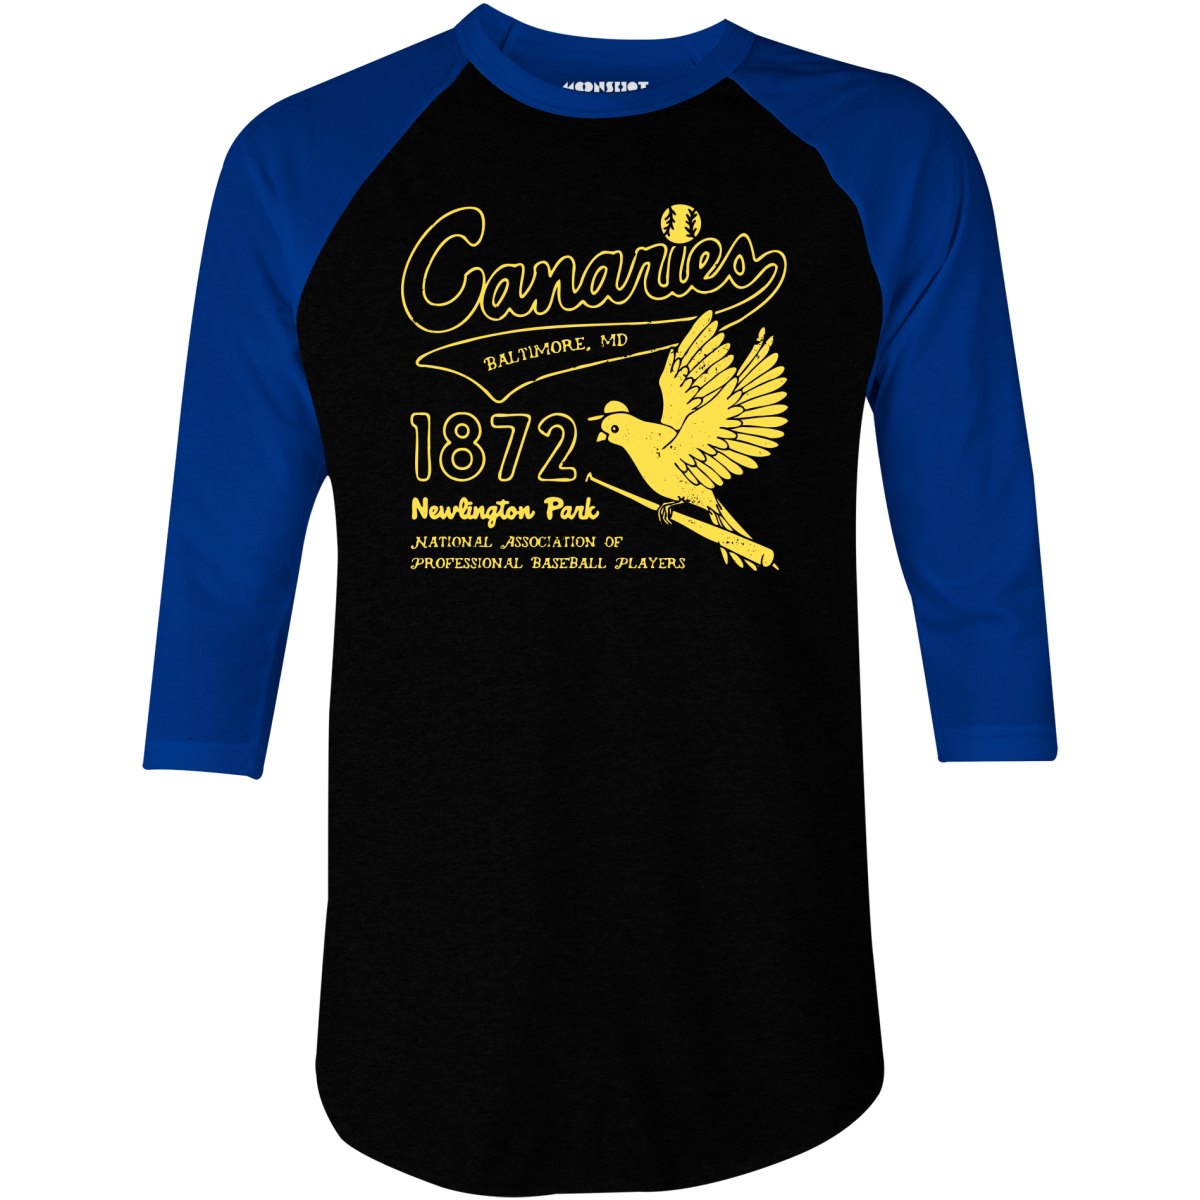 Baltimore Canaries - Maryland - Vintage Defunct Baseball Teams - 3/4 Sleeve Raglan T-Shirt